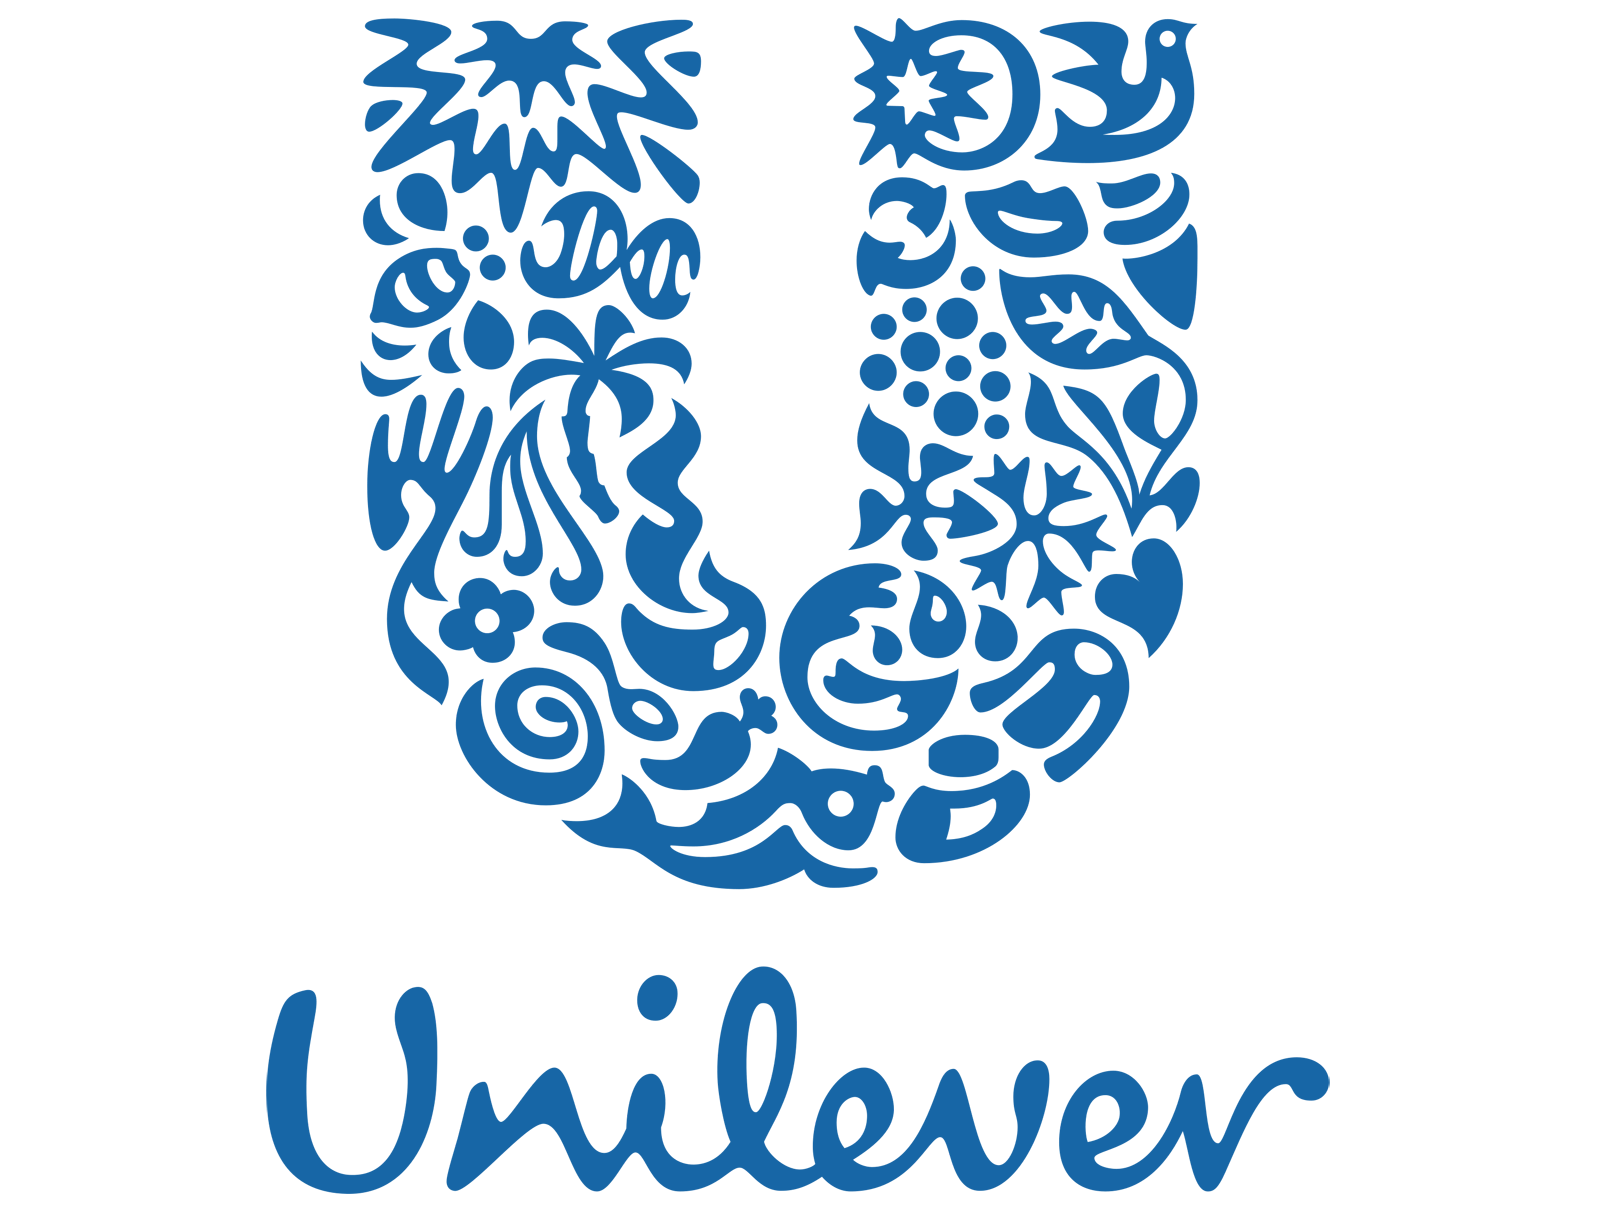 Unilever Logo, Unilever Logo 